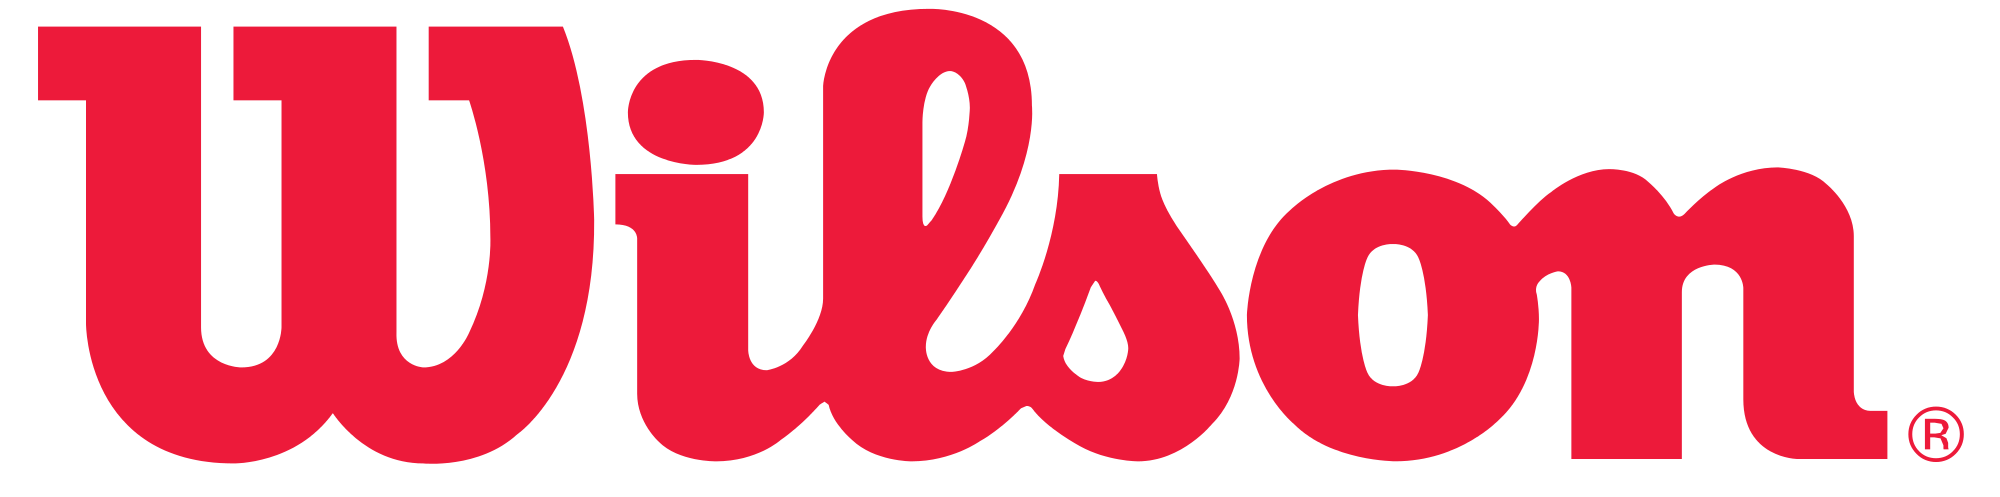 Wilson-logo.svg.png